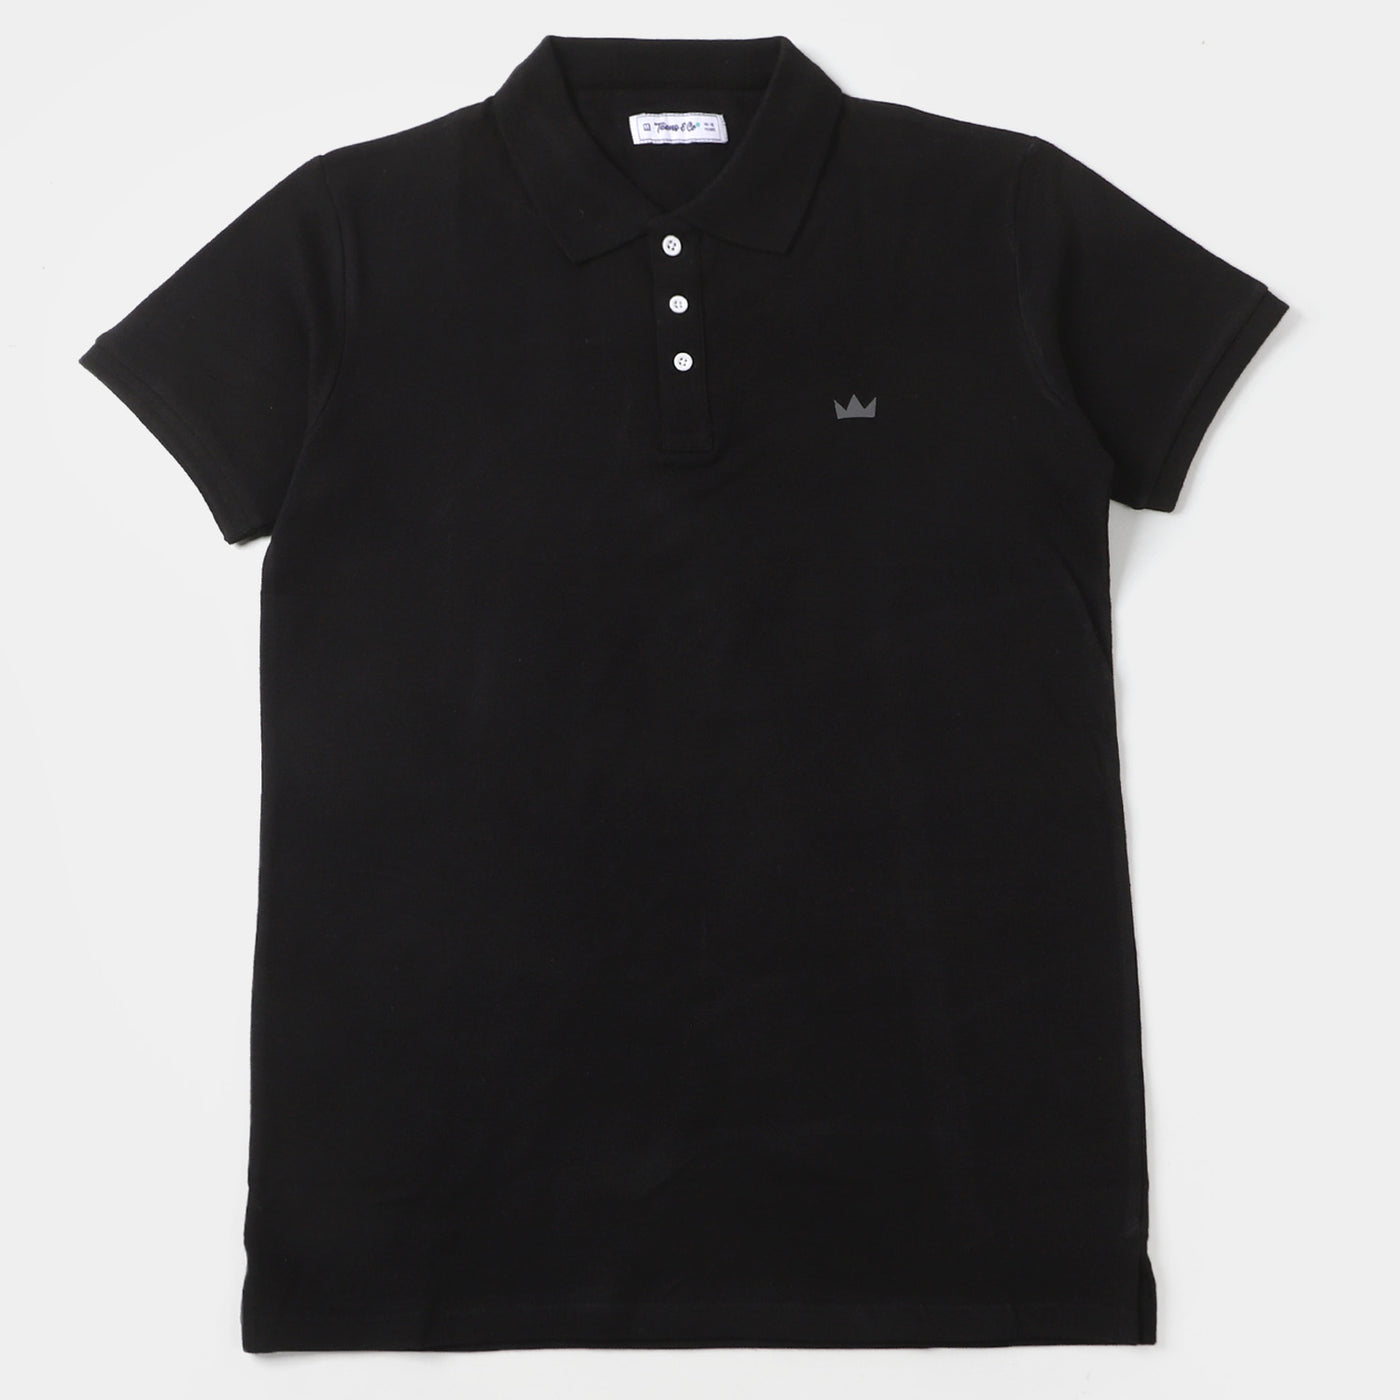 Teens Boys Cotton Polo T-Shirt Basic - Jet Black